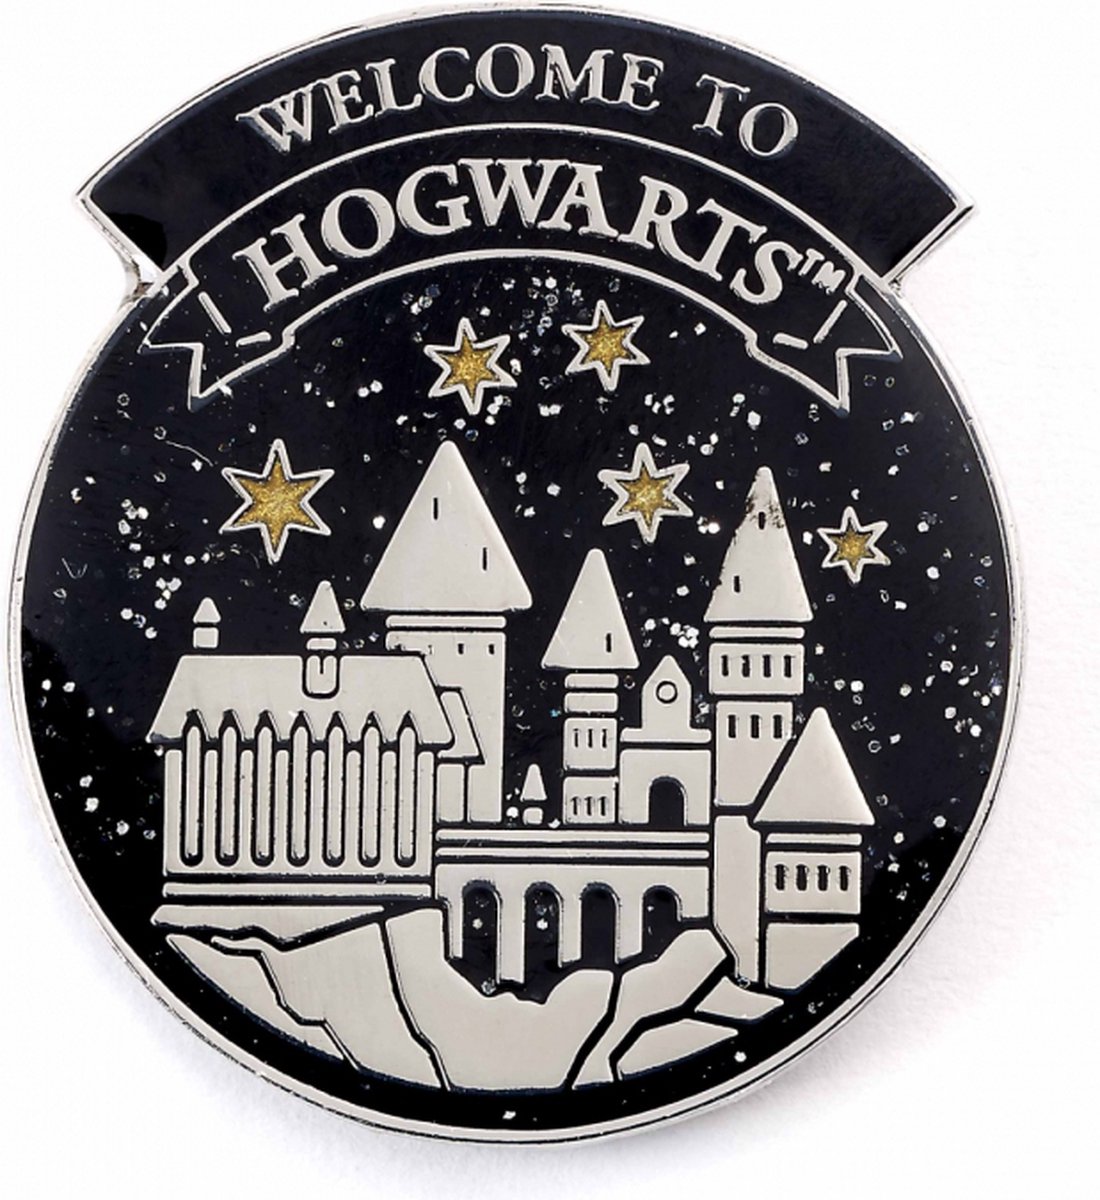 Harry Potter - Maison Serpentard Crest Pin Badge